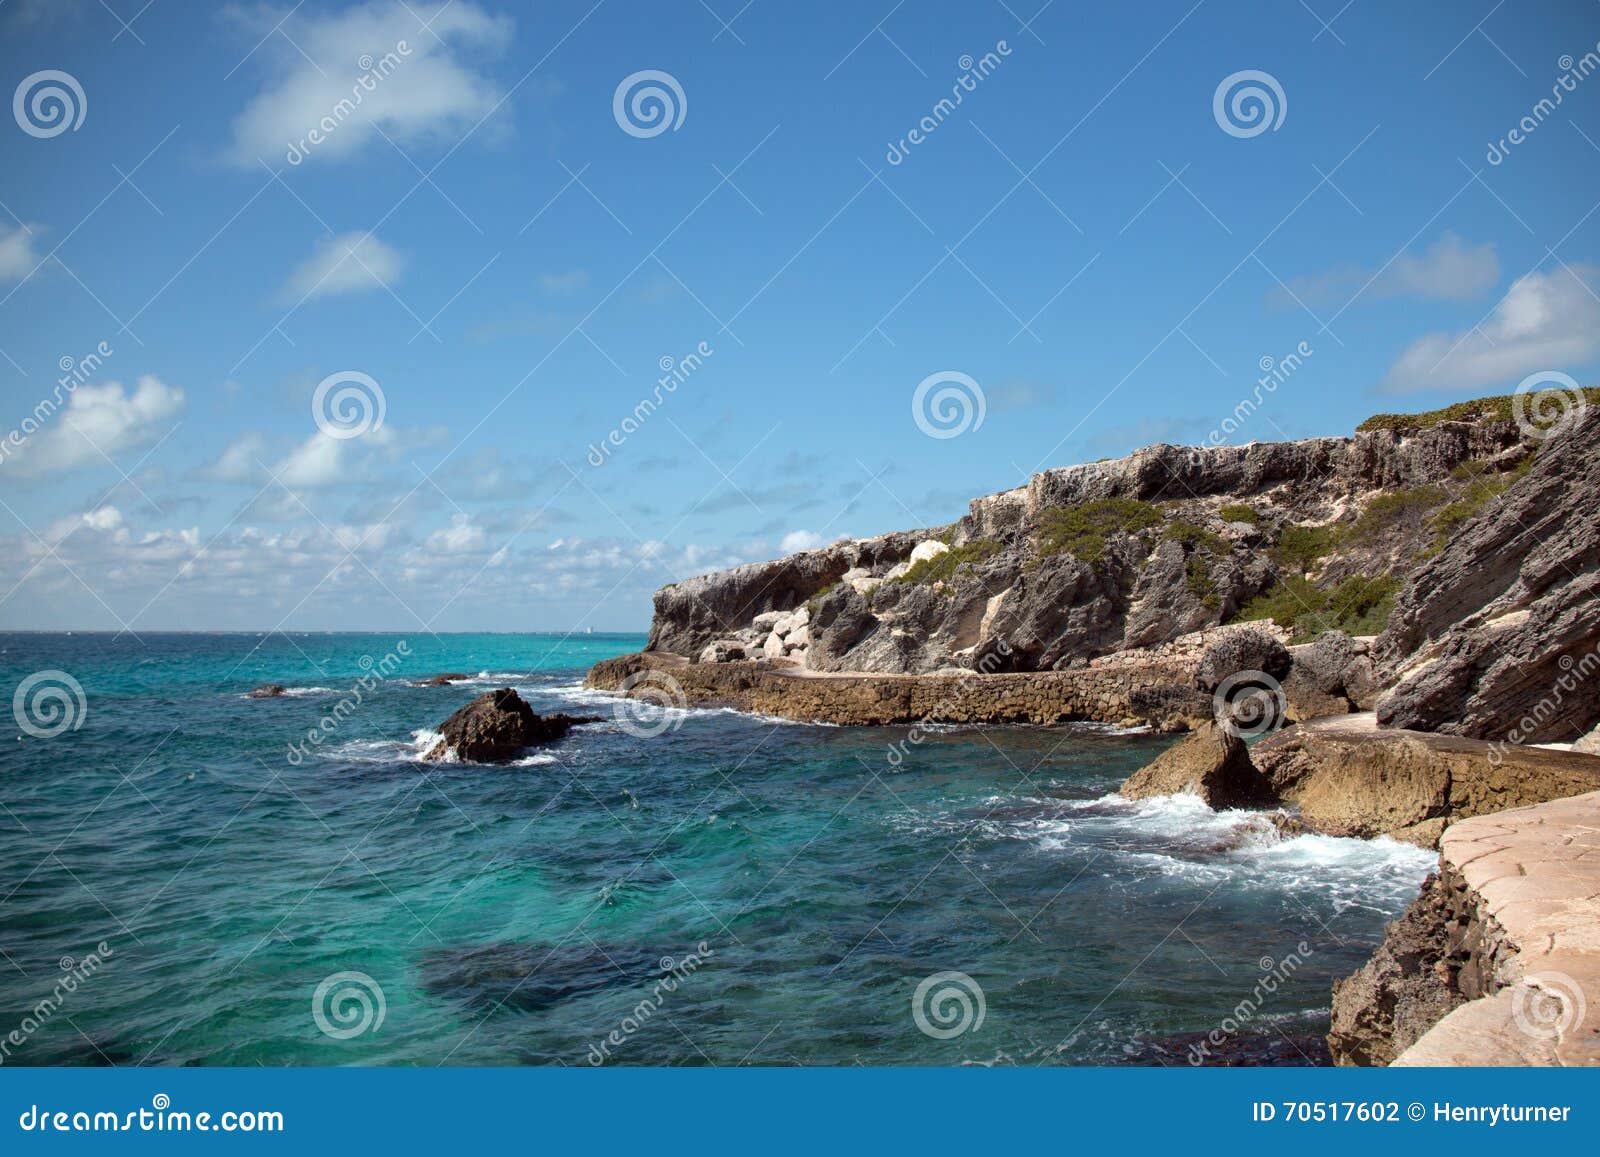 isla mujeres island - punta sur point also called acantilado del amanecer cliff of the dawn